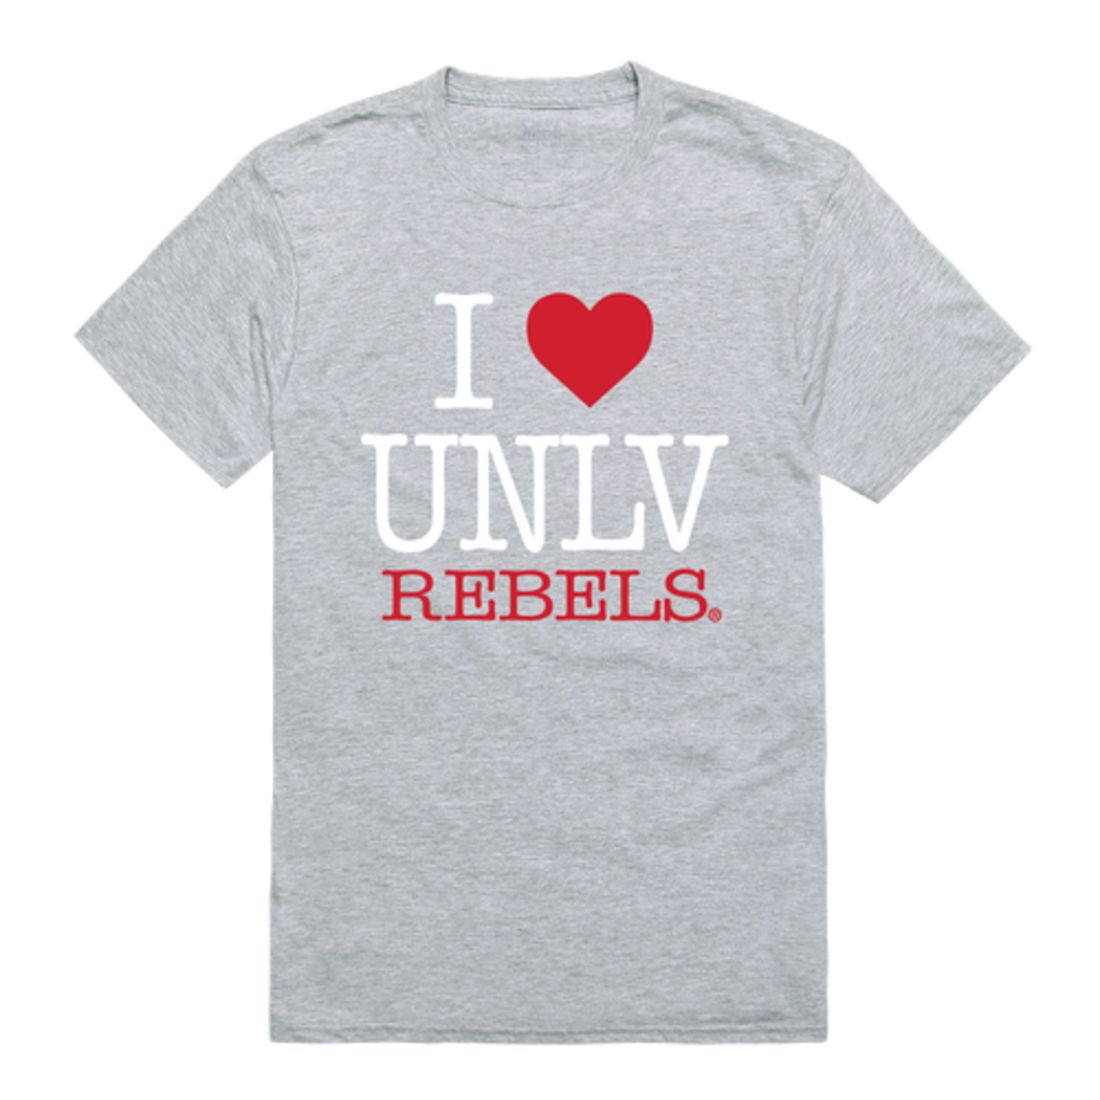 I Love UNLV University of Nevada Las Vegas Rebels T-Shirt Heather Grey X-Large - image 1 of 2